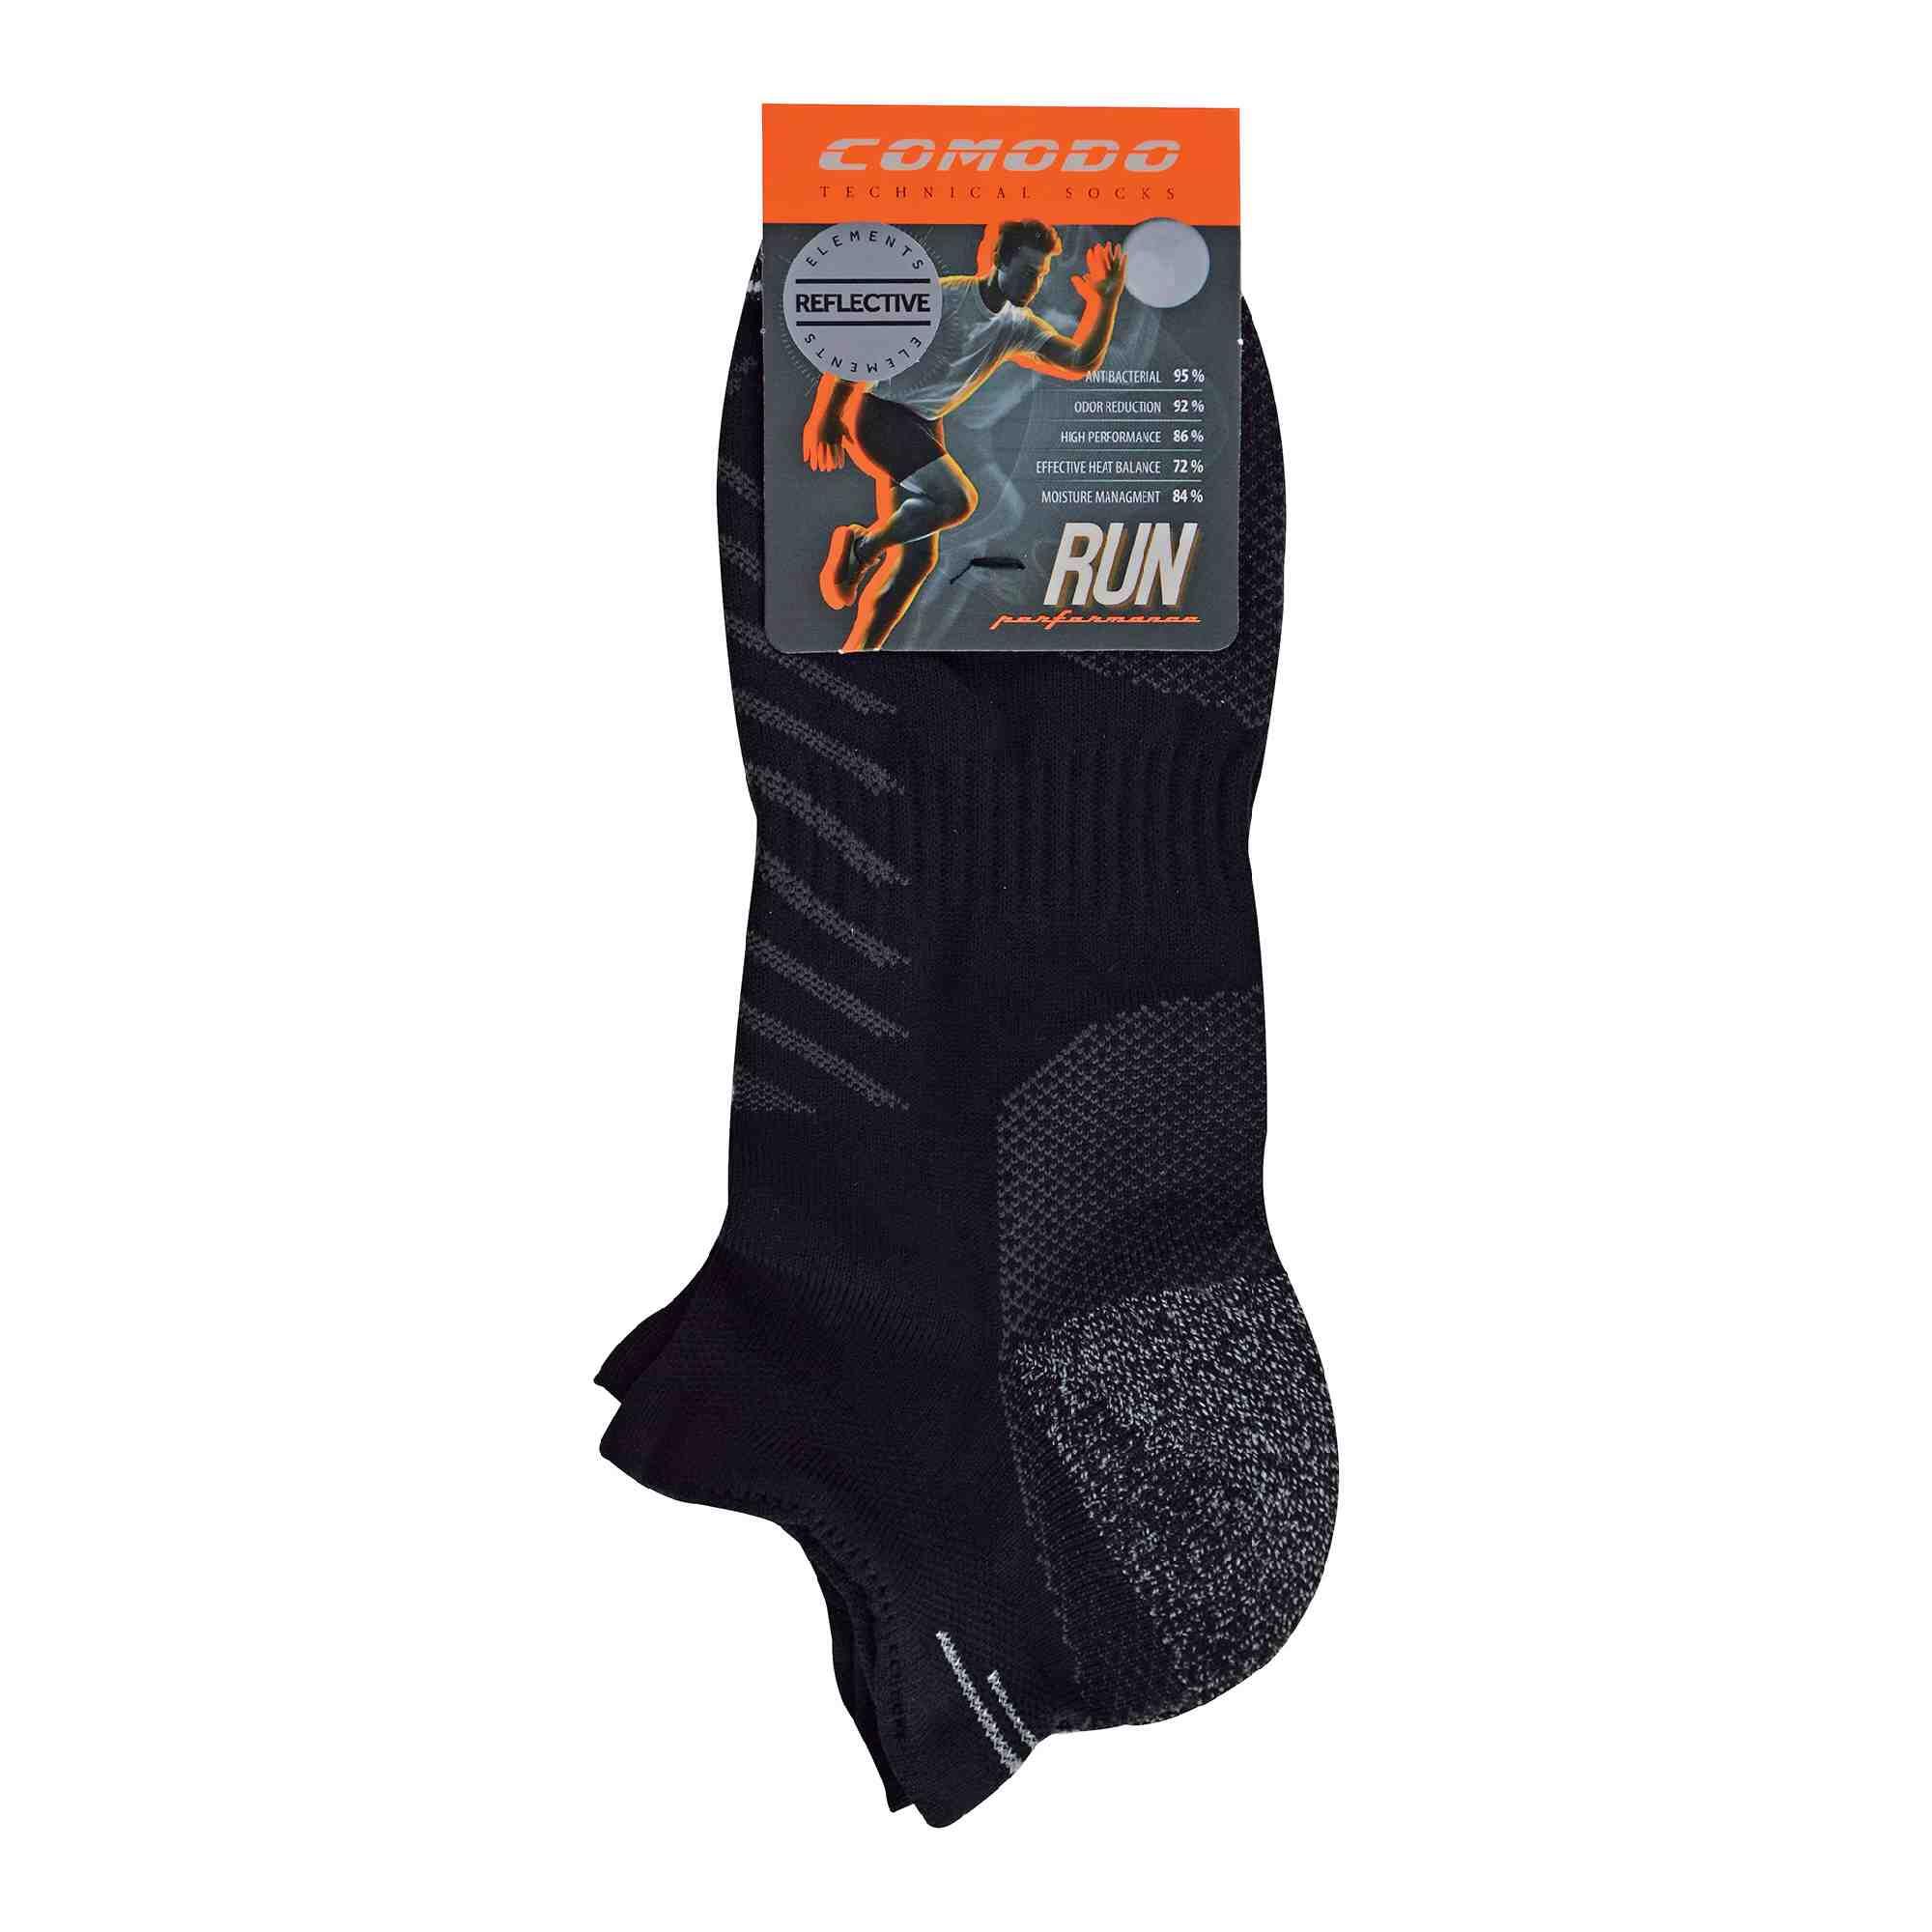 Hi Viz Running Socks for Summer | Reflective Coolmax Socks 2/3